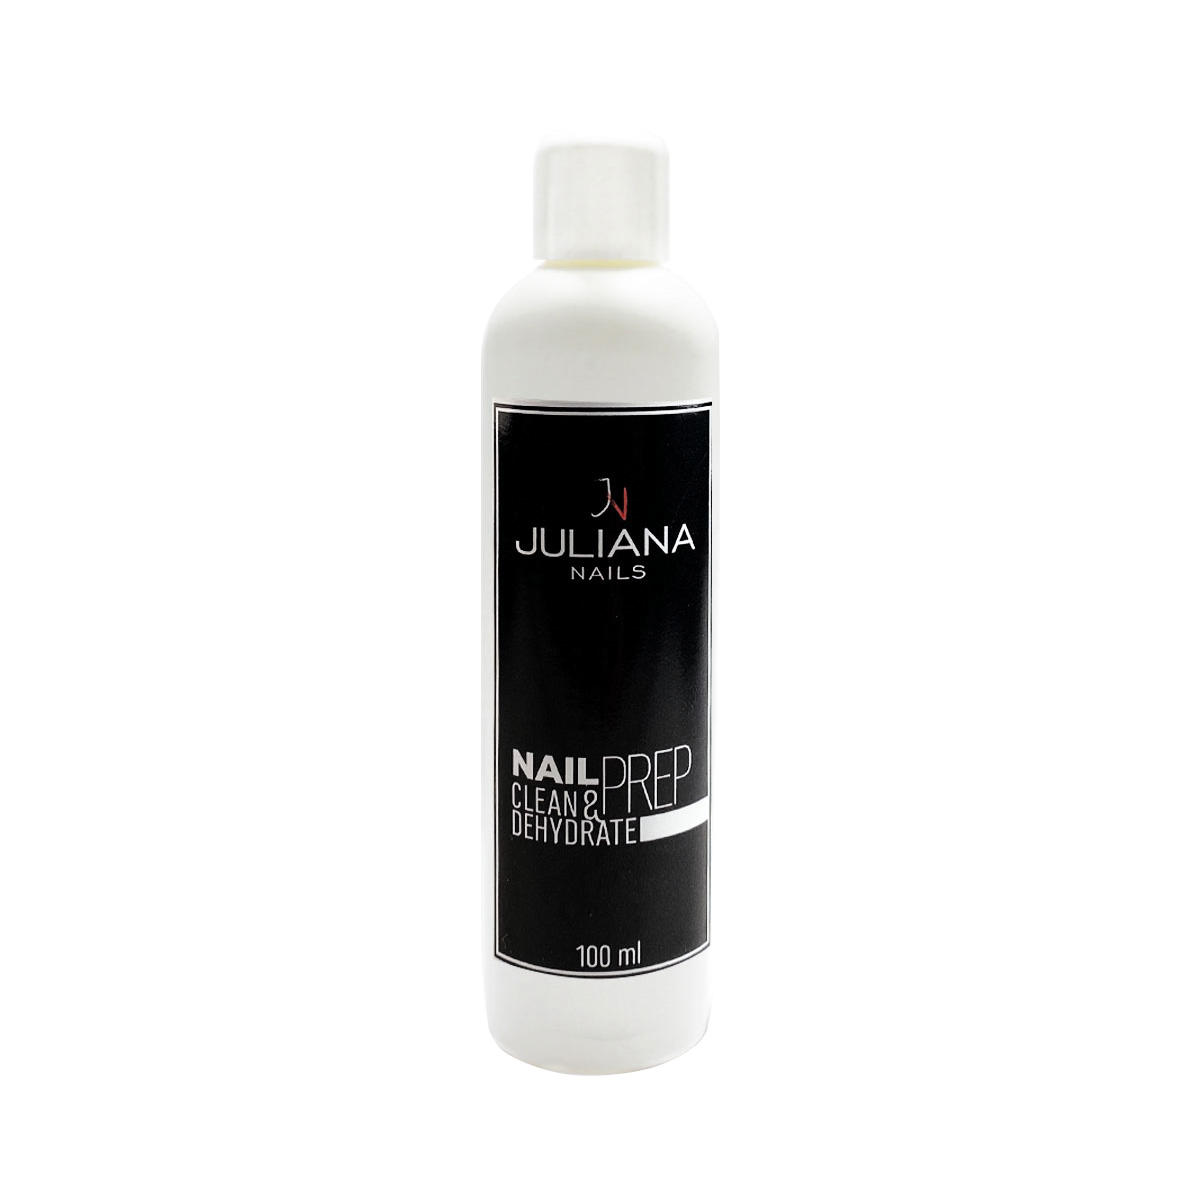 Juliana Nails Nail Prep Clean & Dehydrate  100 ml - 1